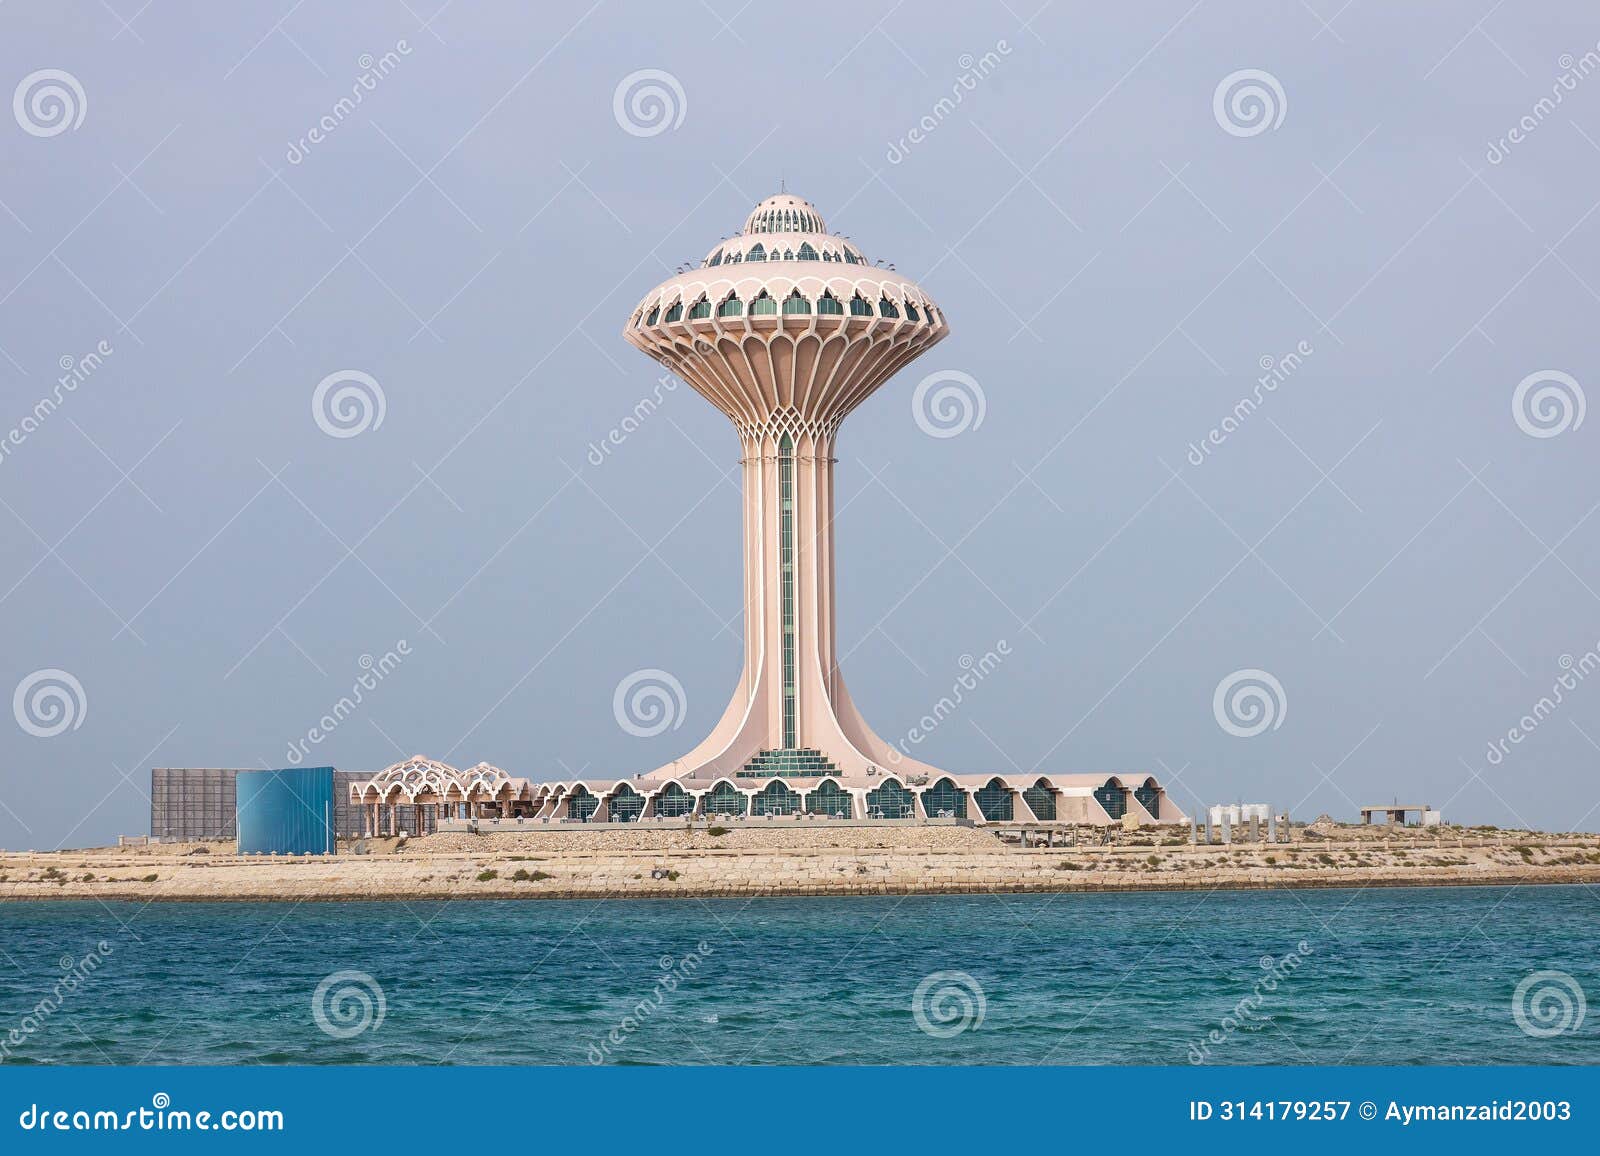 al khobar, khobar water tower al khobar corniche , dammam eastern province, saudi arabia